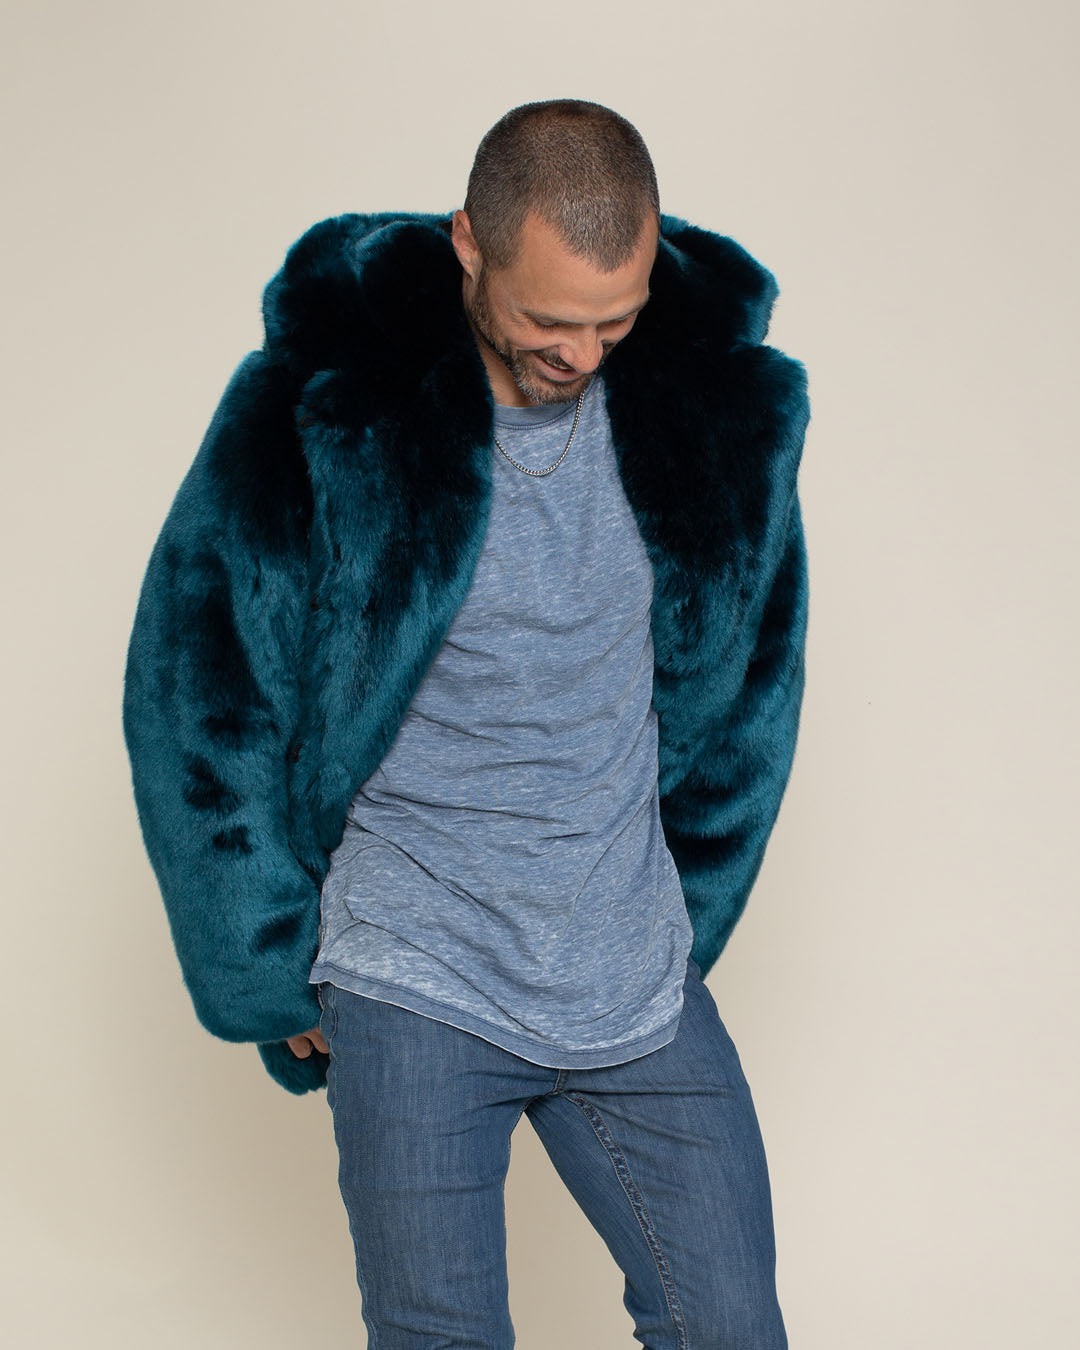 Luxury Wolf Teal Faux Fur Men's Coat with Hood | SpiritHoods